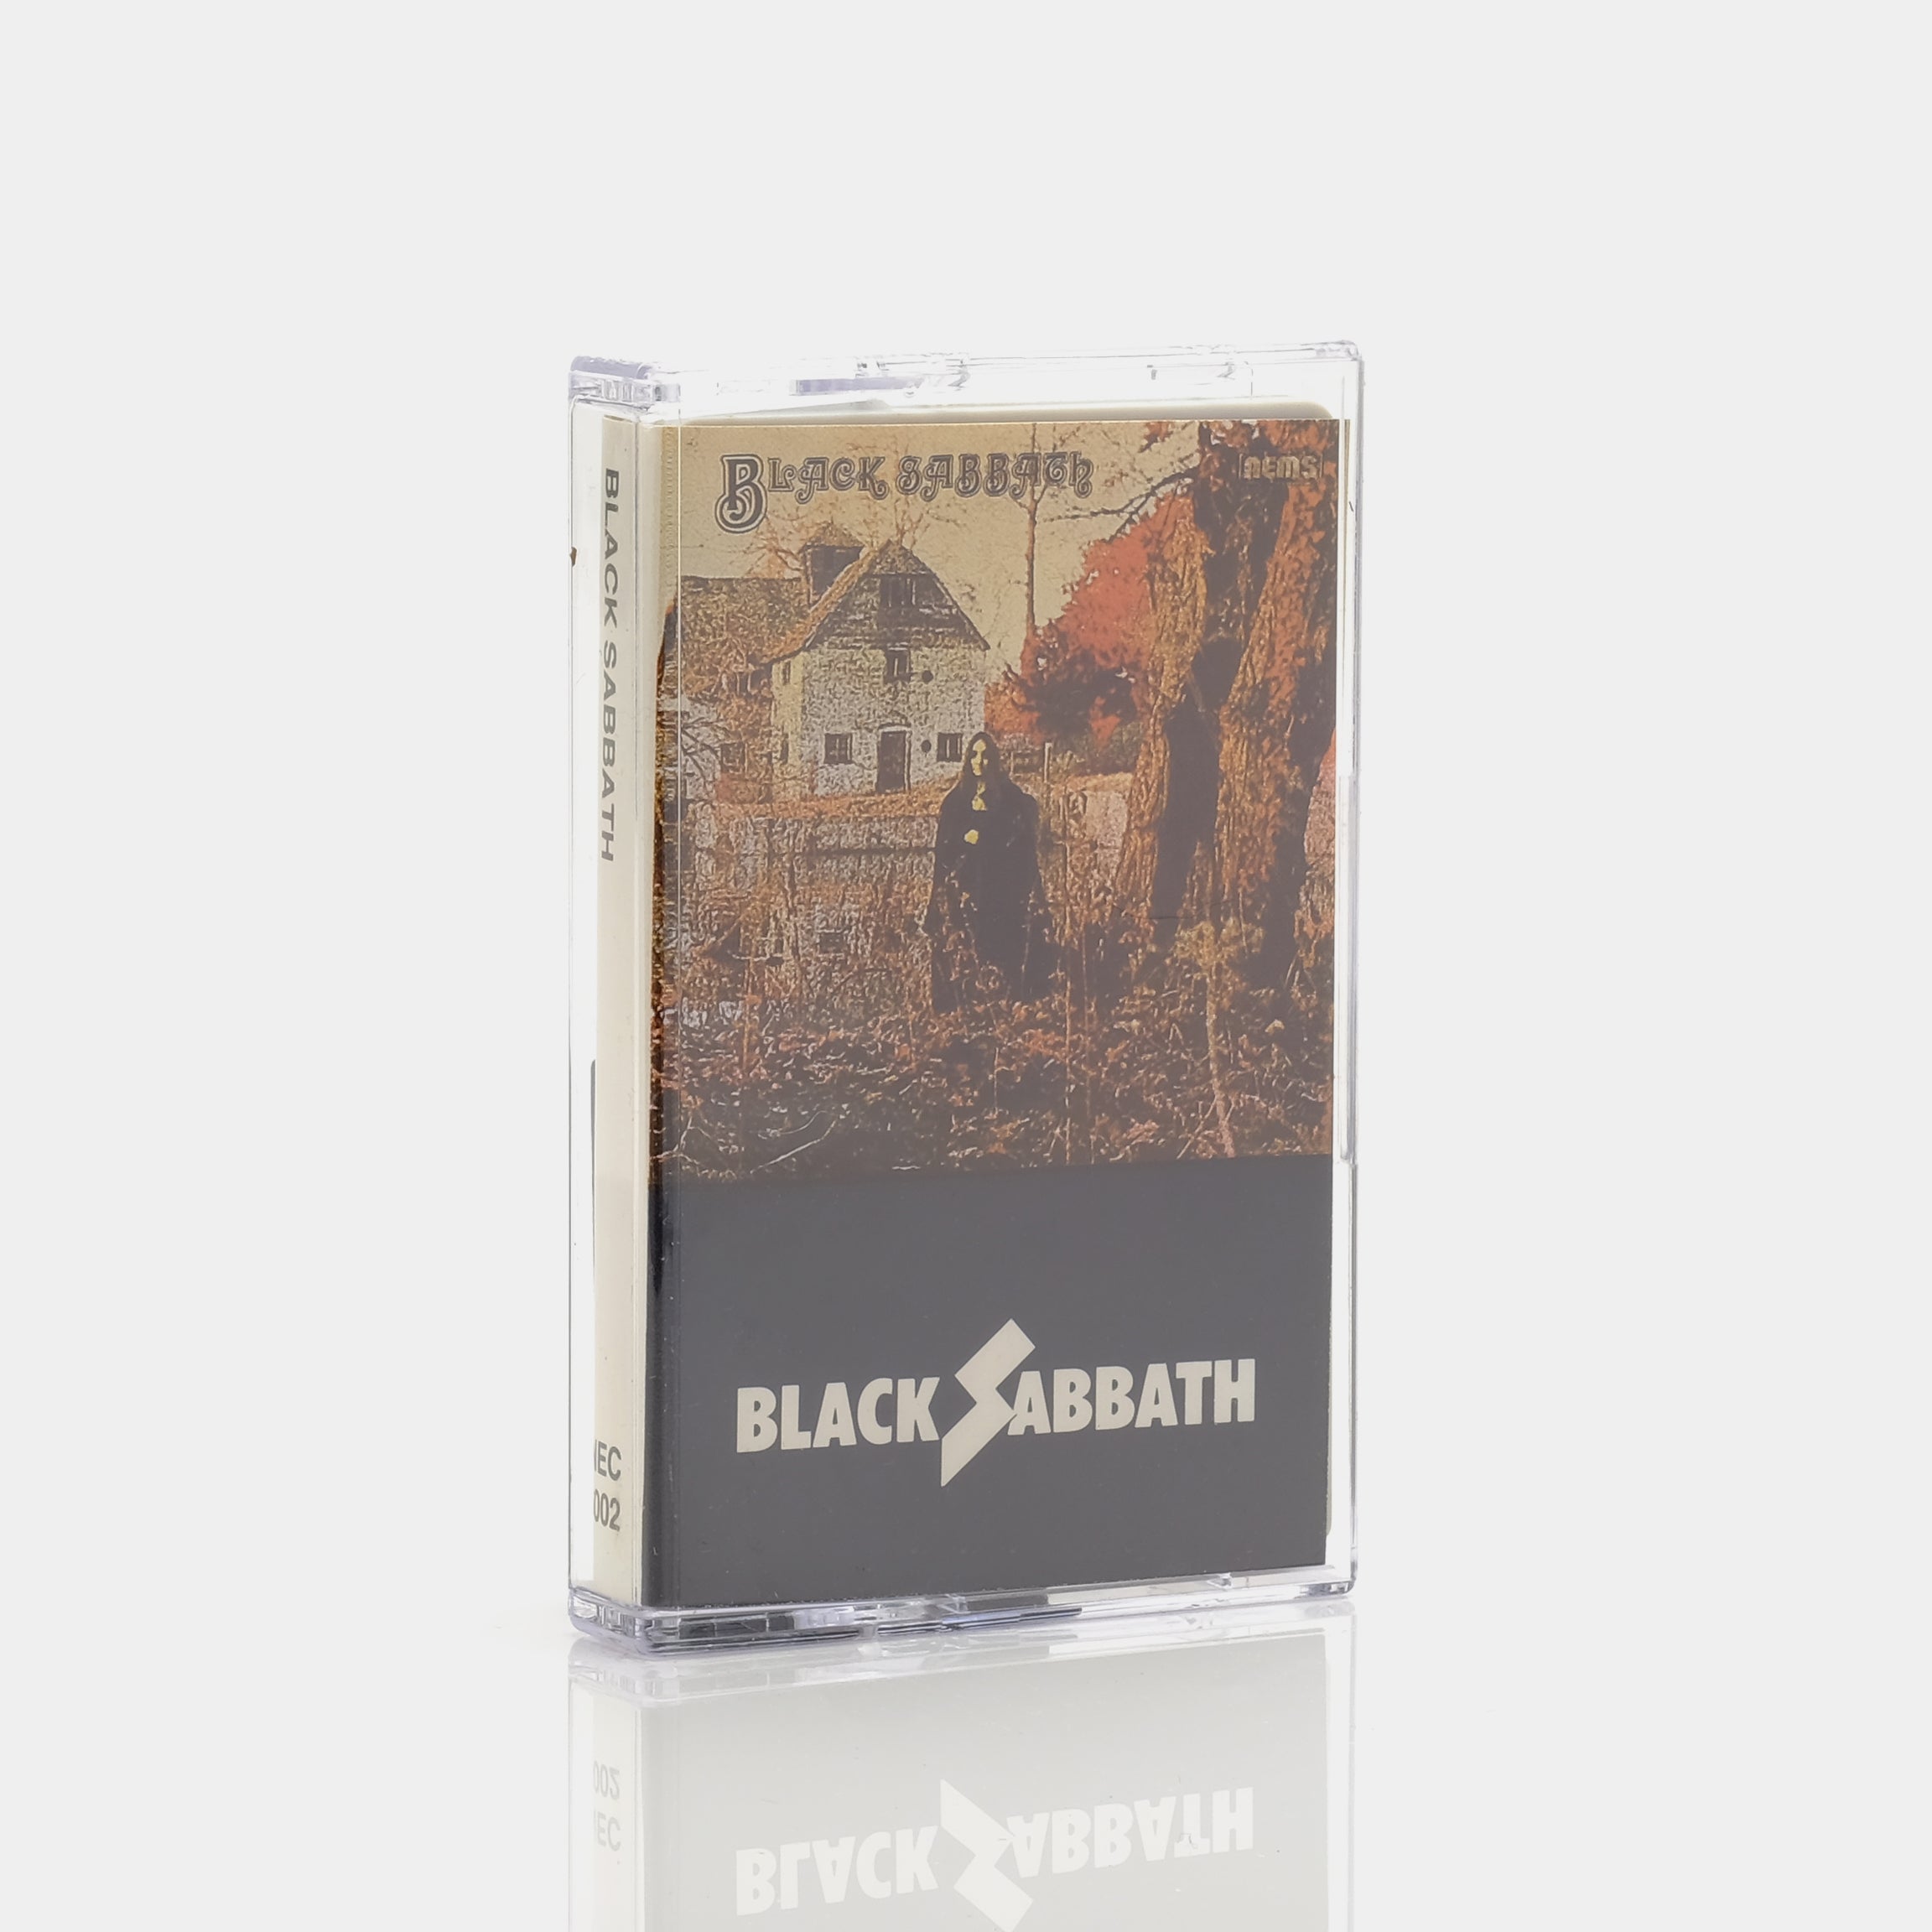 Black Sabbath - Black Sabbath Cassette Tape